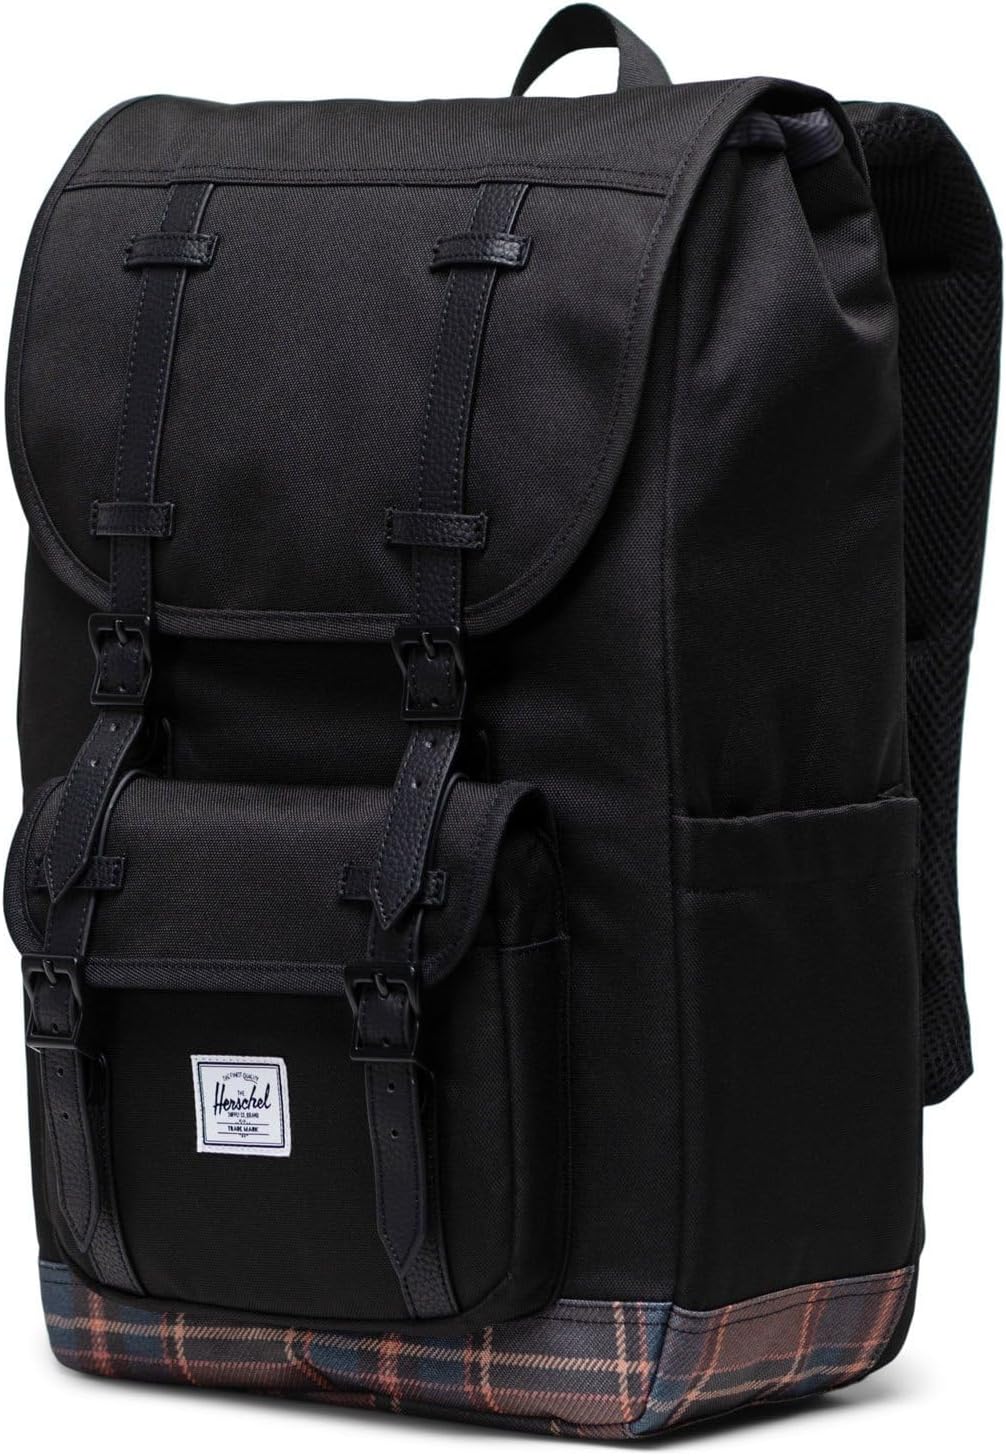 Рюкзак Little America Mid Backpack Herschel Supply Co., цвет Black Winter Plaid рюкзак herschel little america mid 10020 black grayscale plaid